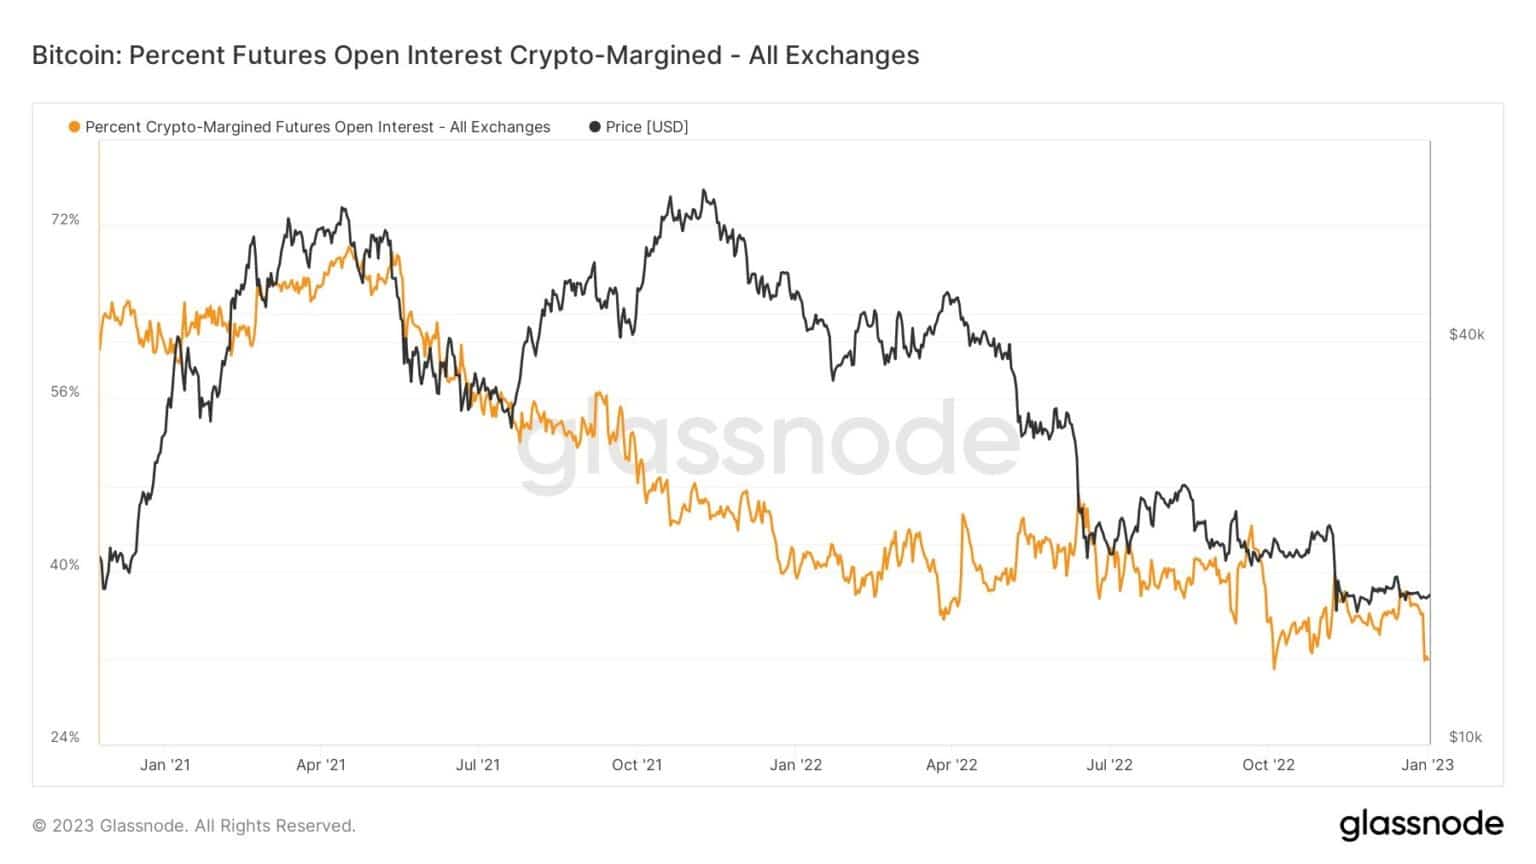 Bitcoin: Percentage Futures Open Interest crypto-Margined metriek - Bron: Glassnode.com